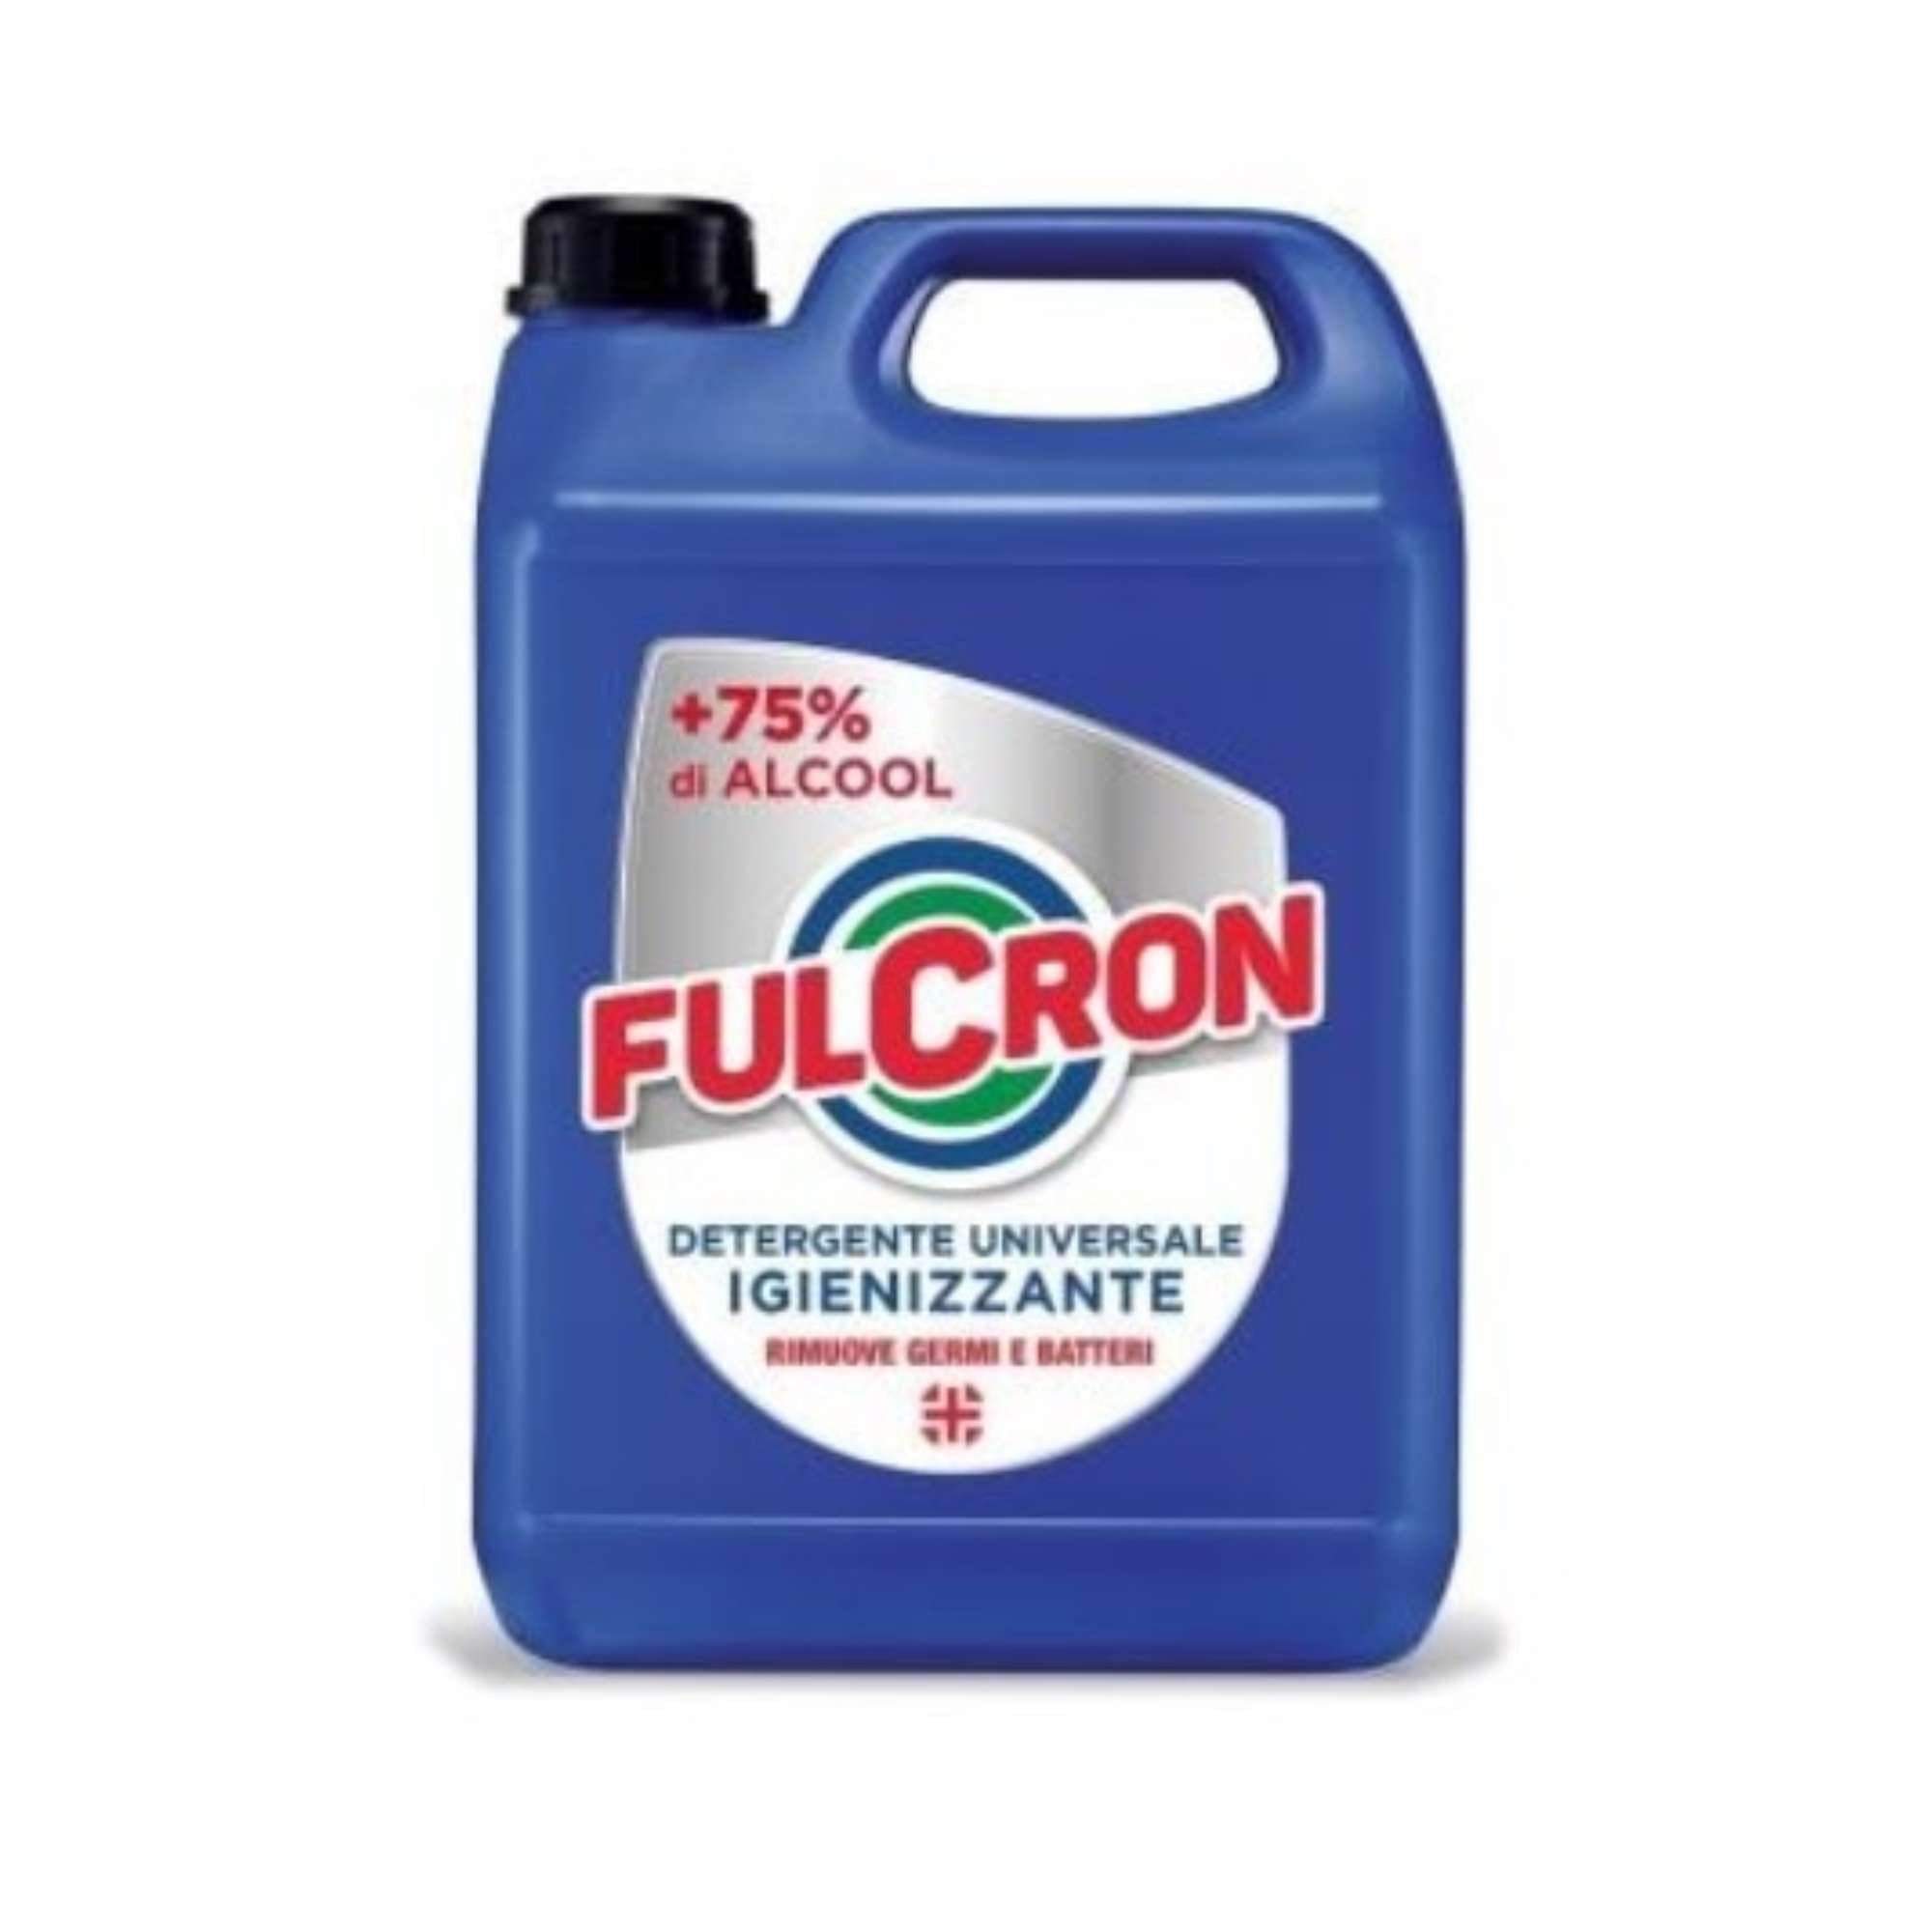 Detergente universale igienizzante Fulcron 5 litri - Arexons 2026